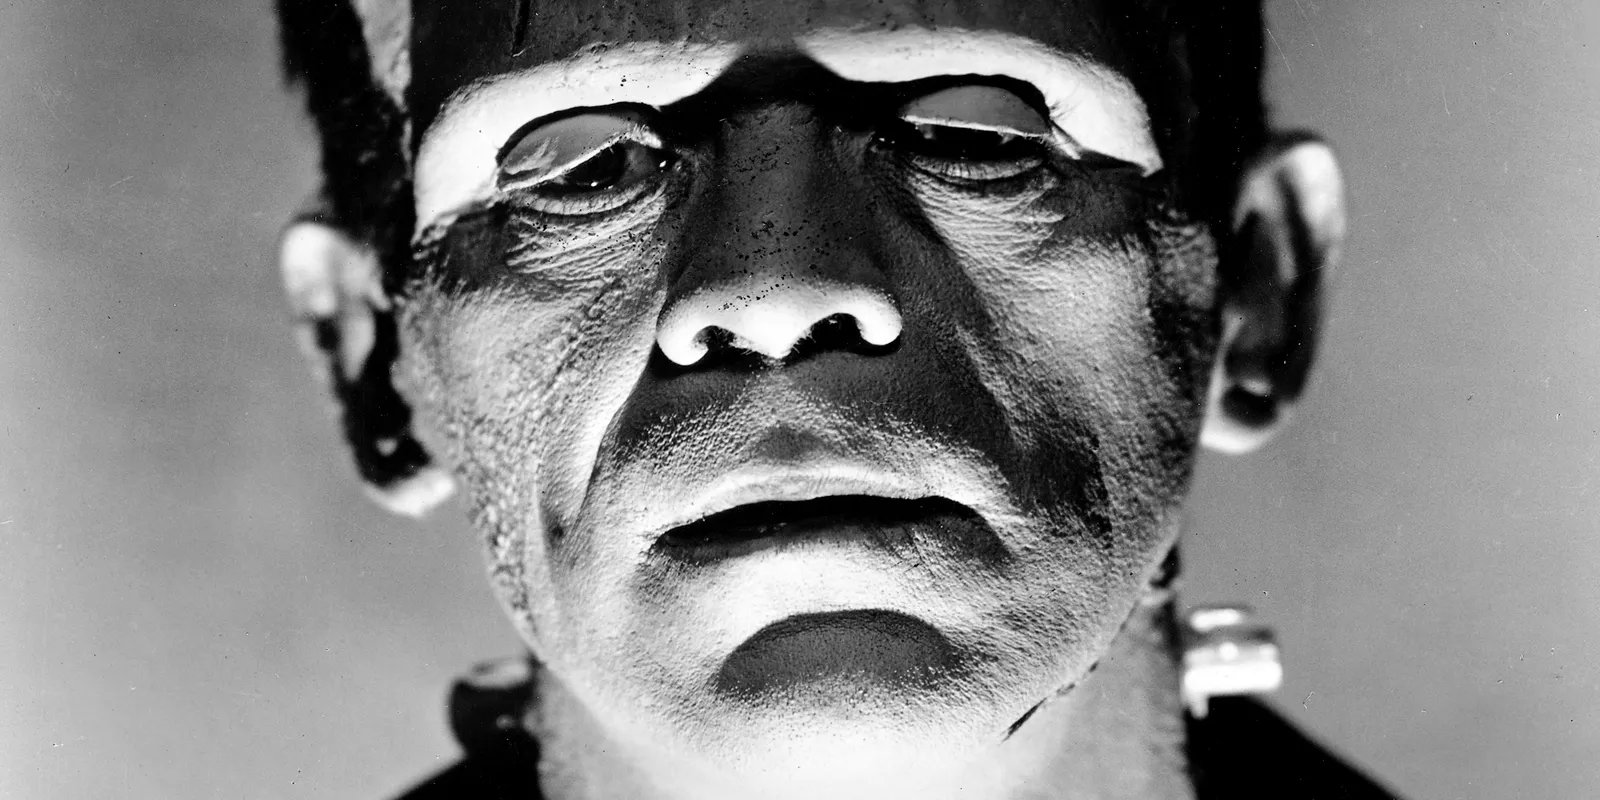 A portrait of Frankenstein's monster